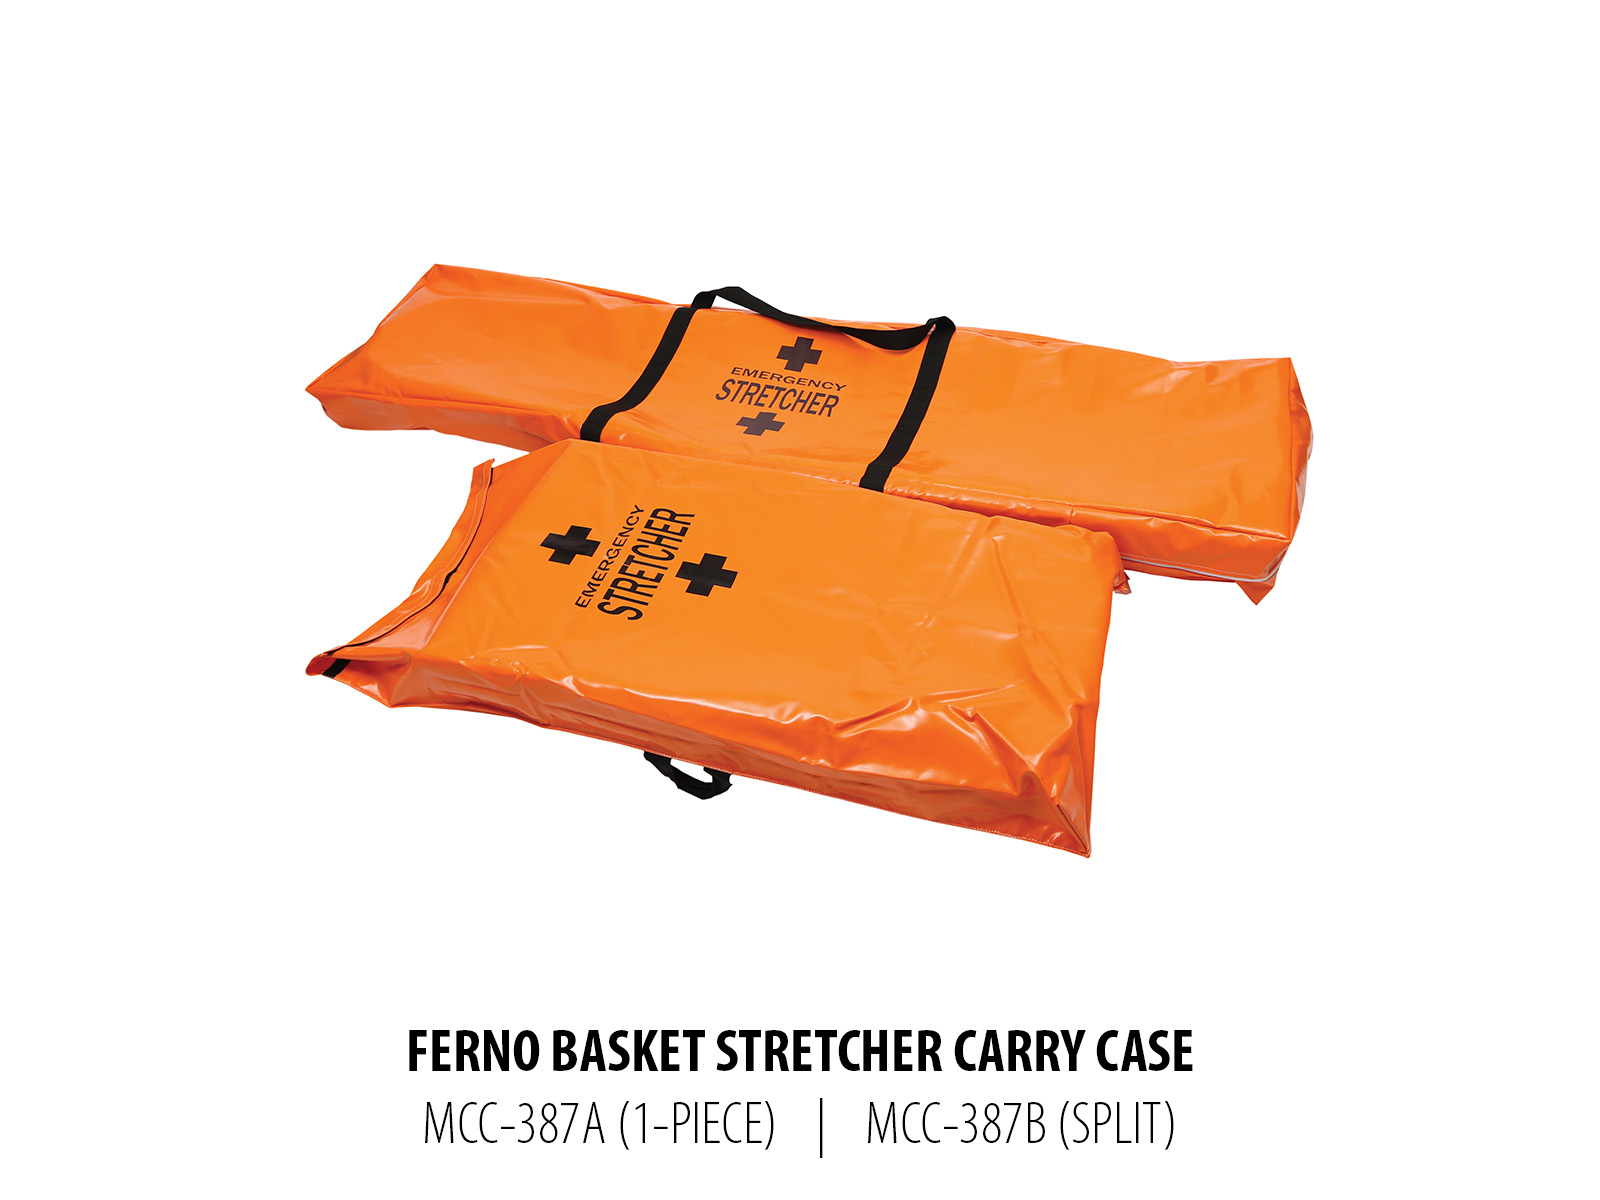 Basket Stretcher Carry Case